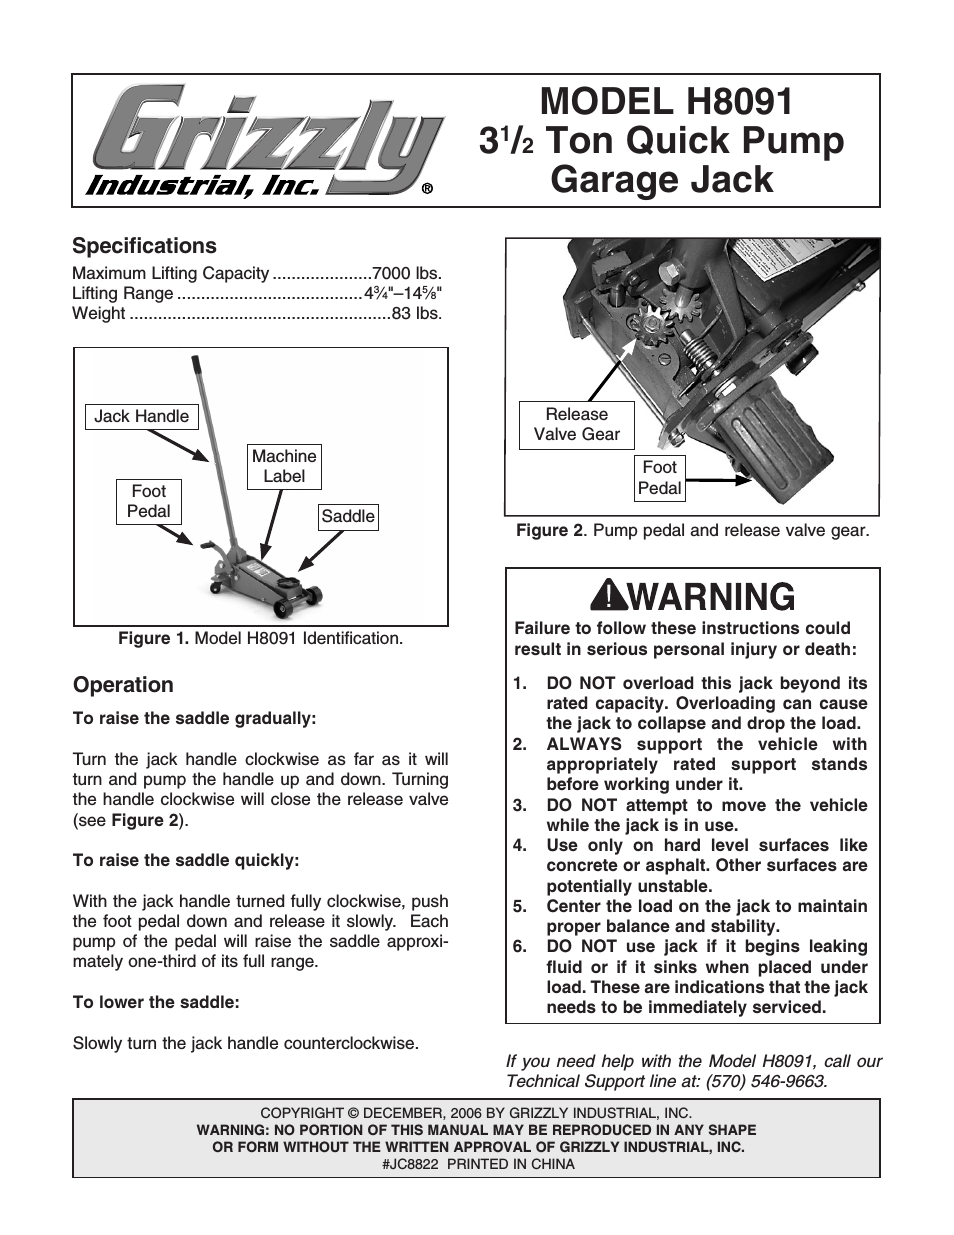 3 1/2 Ton Quick Pump Garage Jack H8091